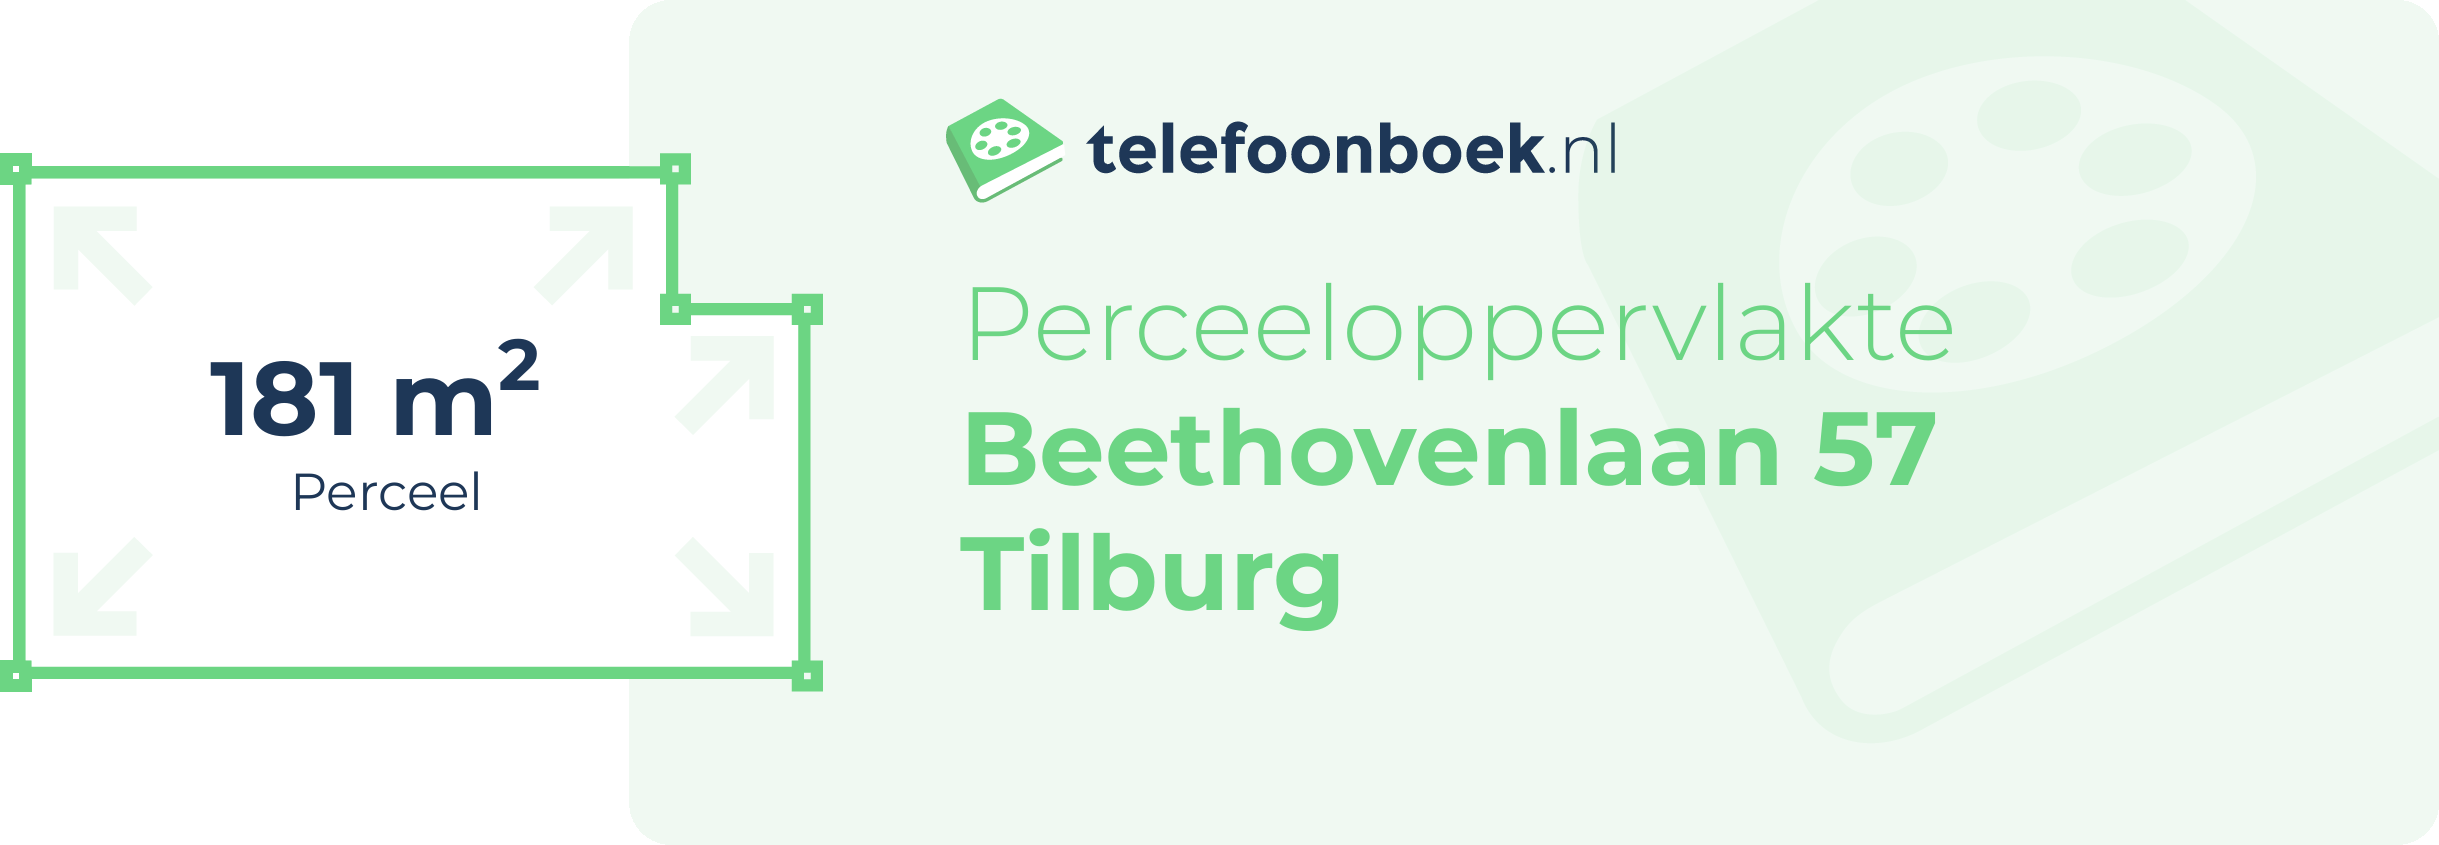 Perceeloppervlakte Beethovenlaan 57 Tilburg